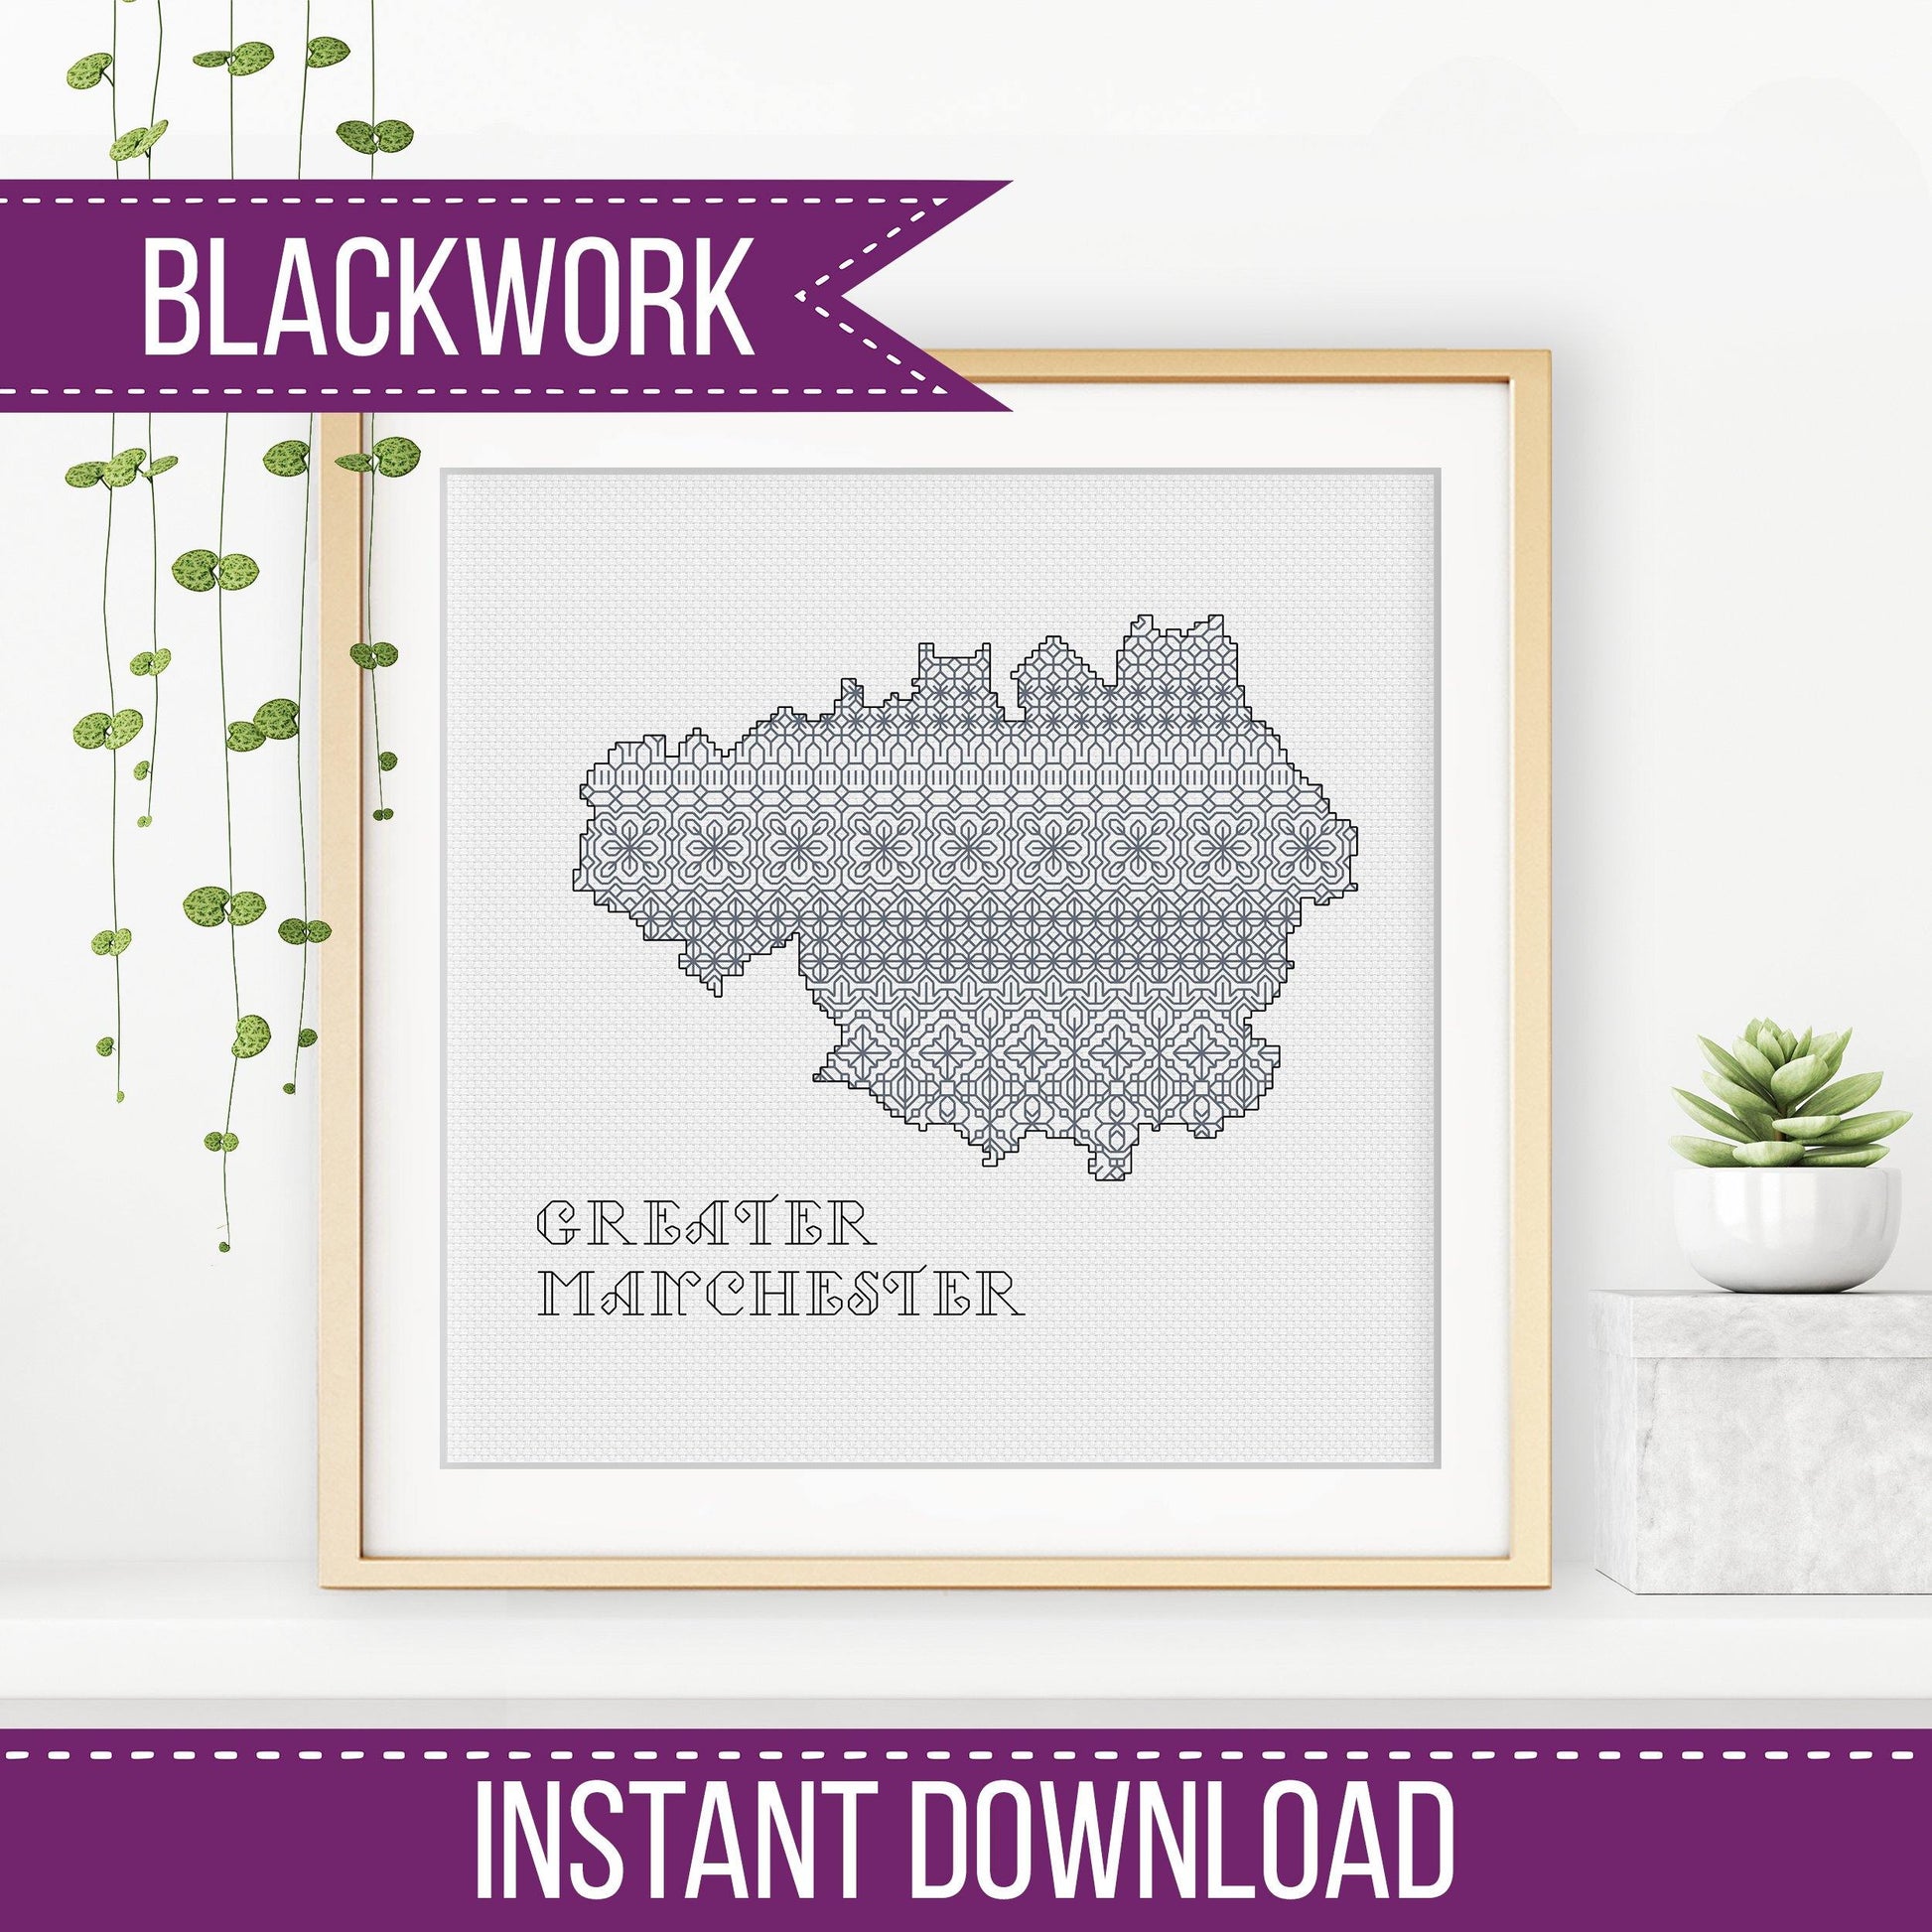 Greater Manchester Blackwork - Blackwork Patterns & Cross Stitch by Peppermint Purple